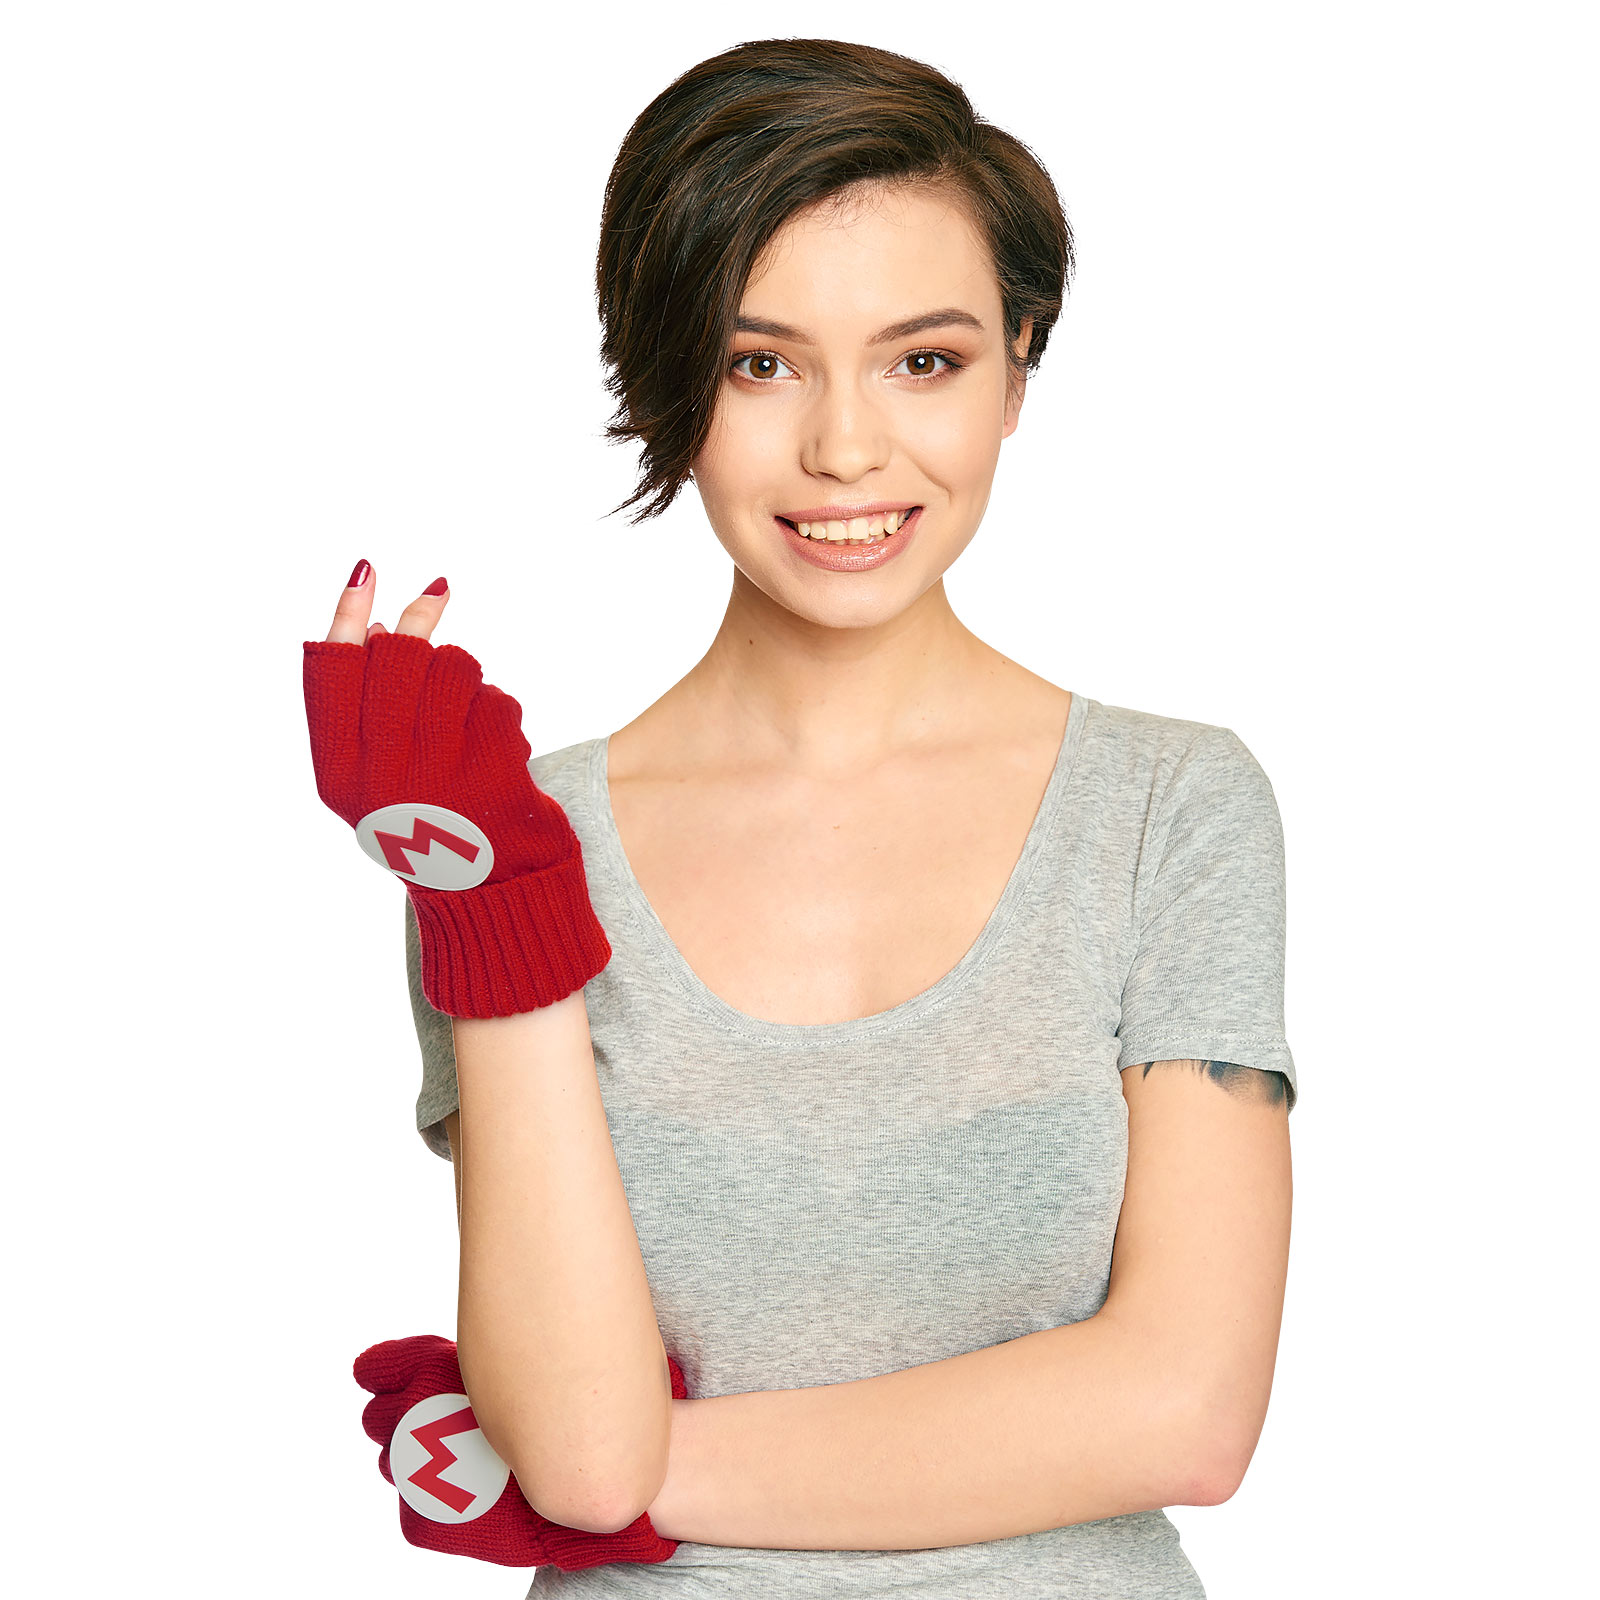 Super Mario - Fingerlose Logo Handschuhe rot